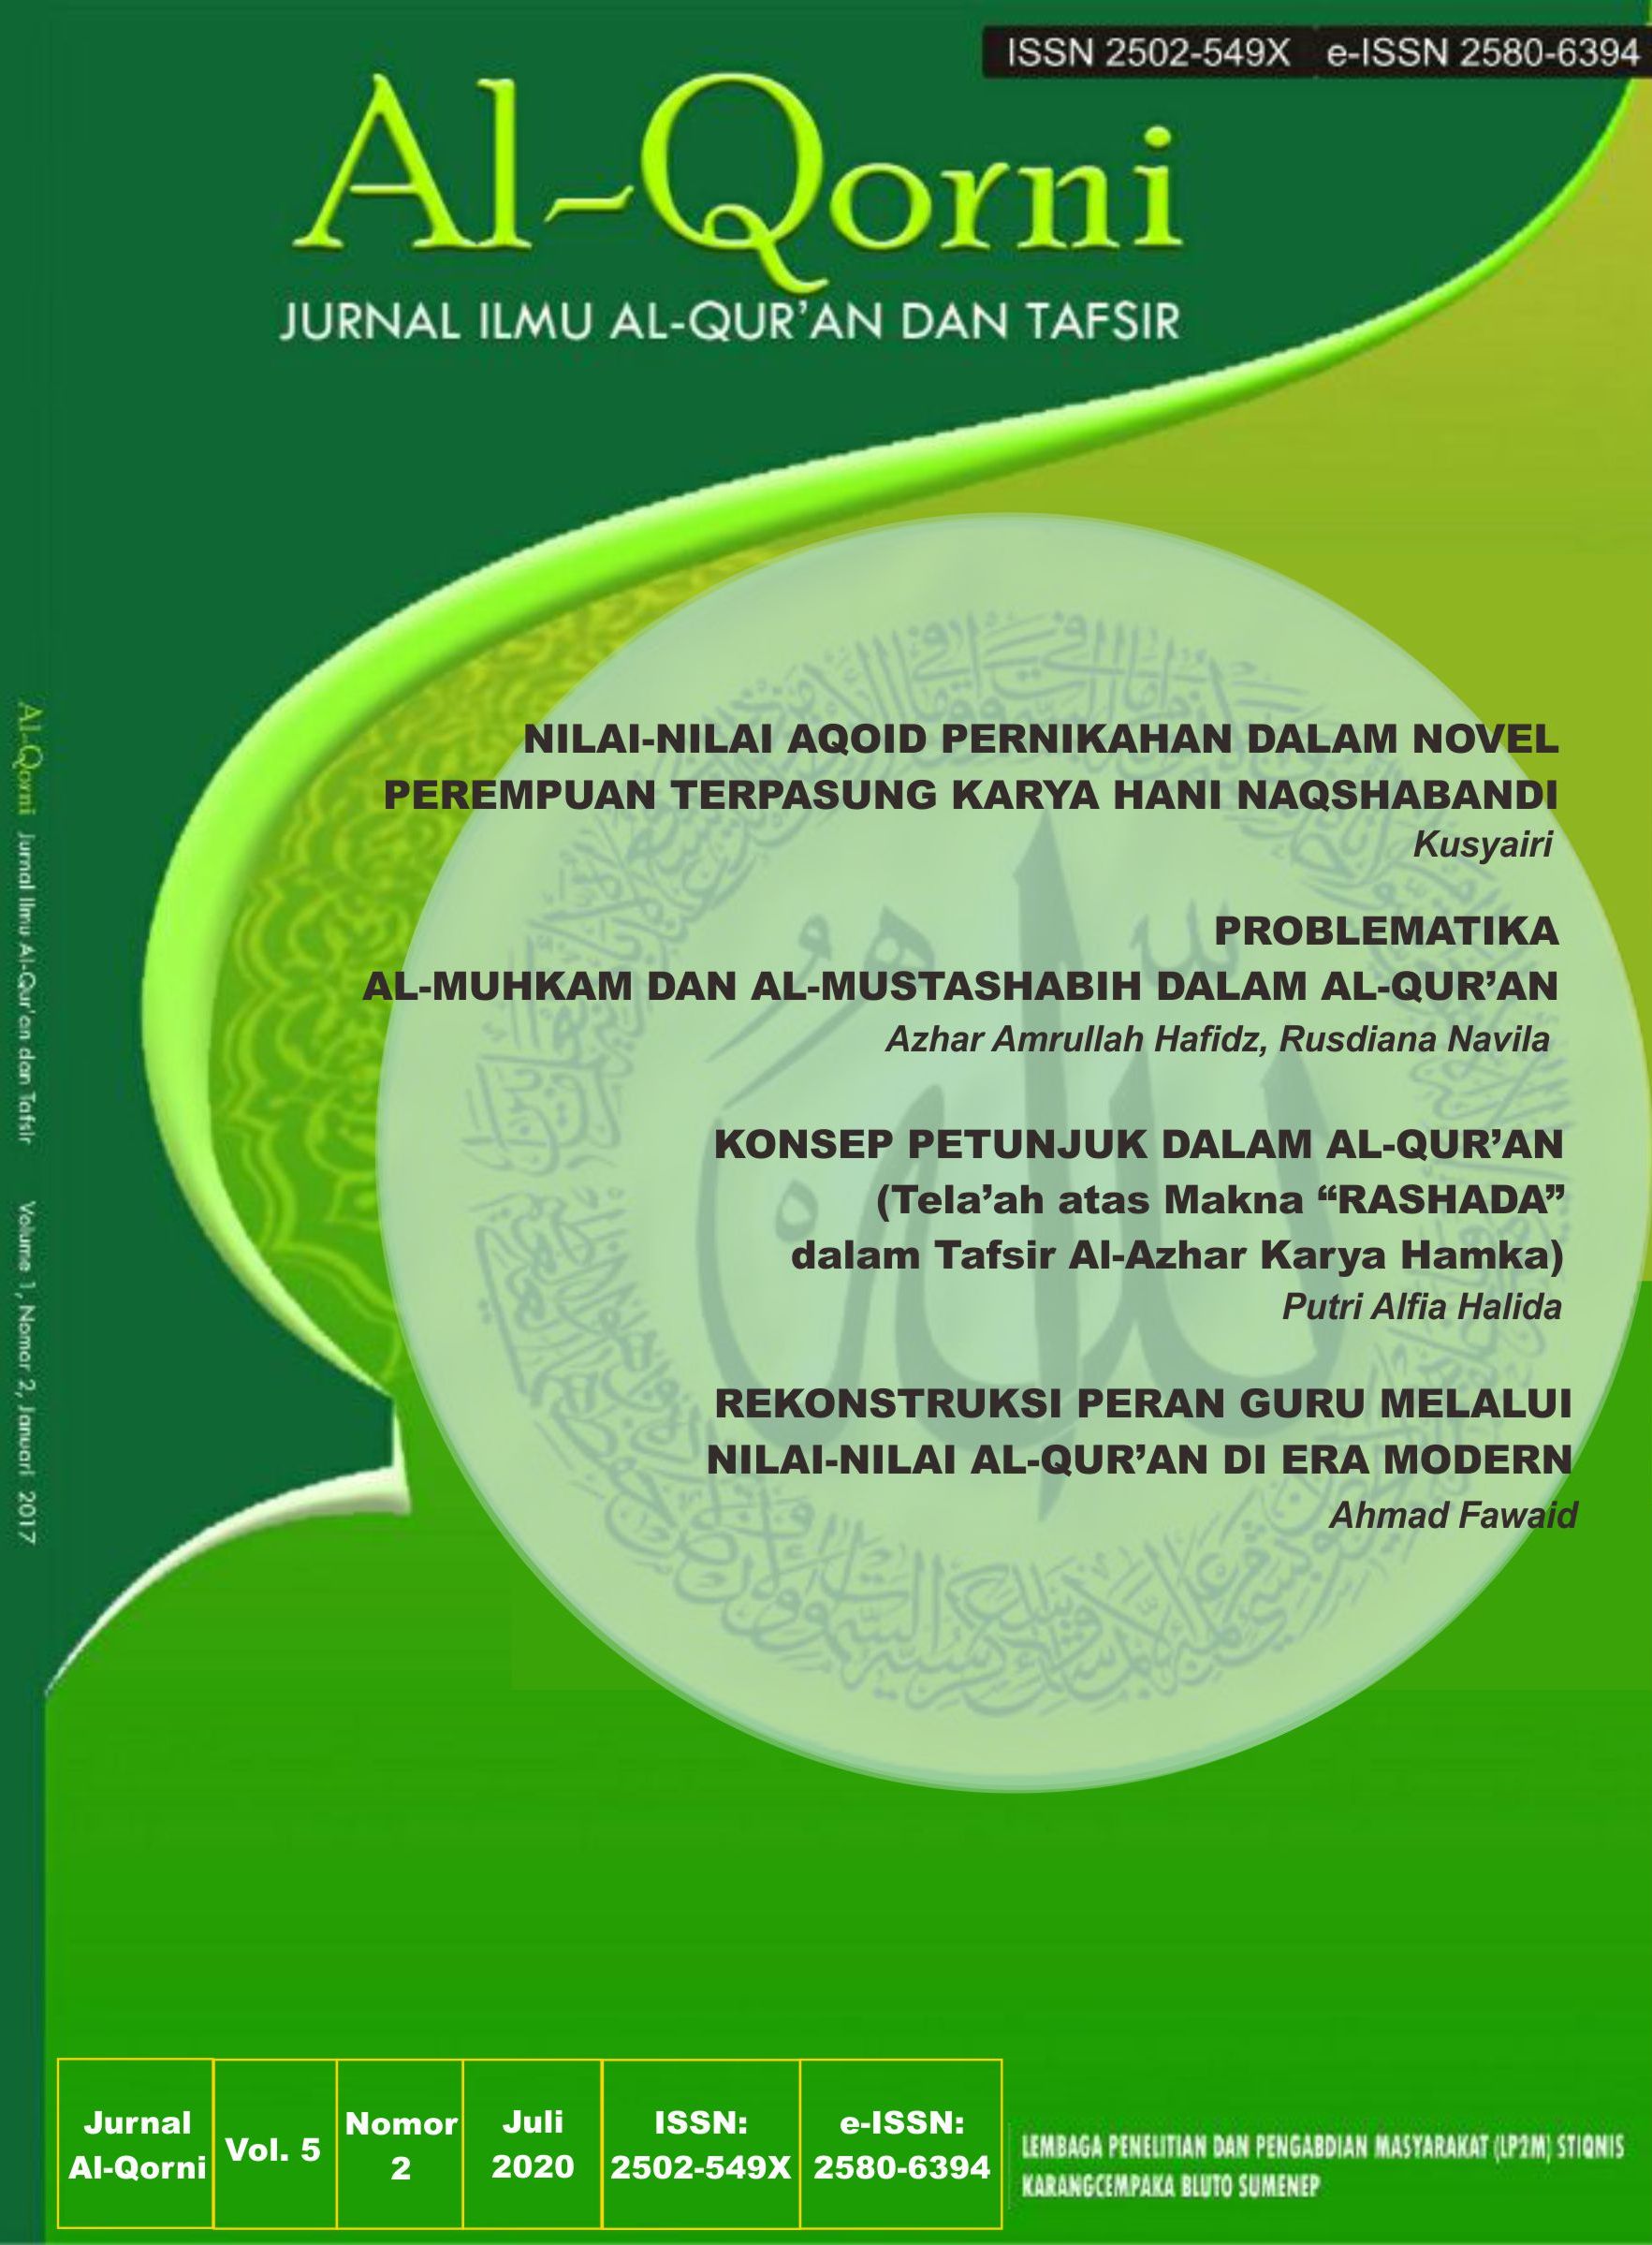 					Lihat Vol 5 No 2 (2020): Jurnal Ilmu Al-Qur'an dan Tafsir
				